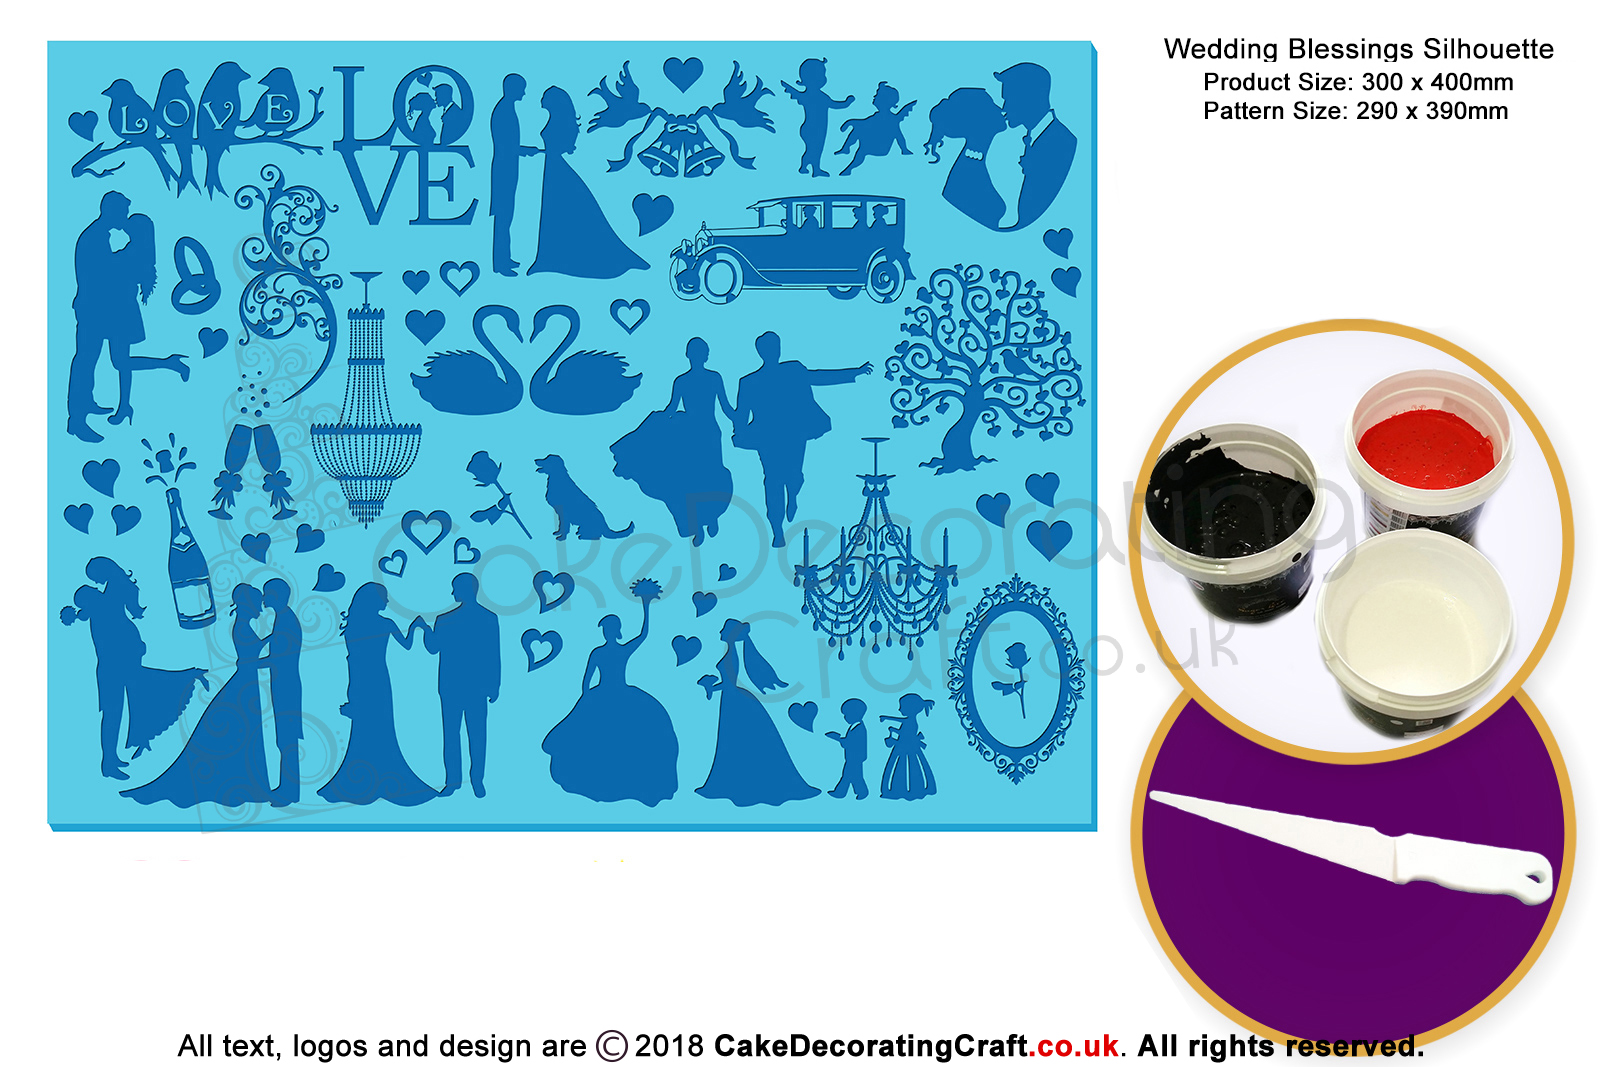 Wedding Blessings | Silhouette Cake Design Starter Kits | Cupcake Cookies Cake Decorating Craft Tool